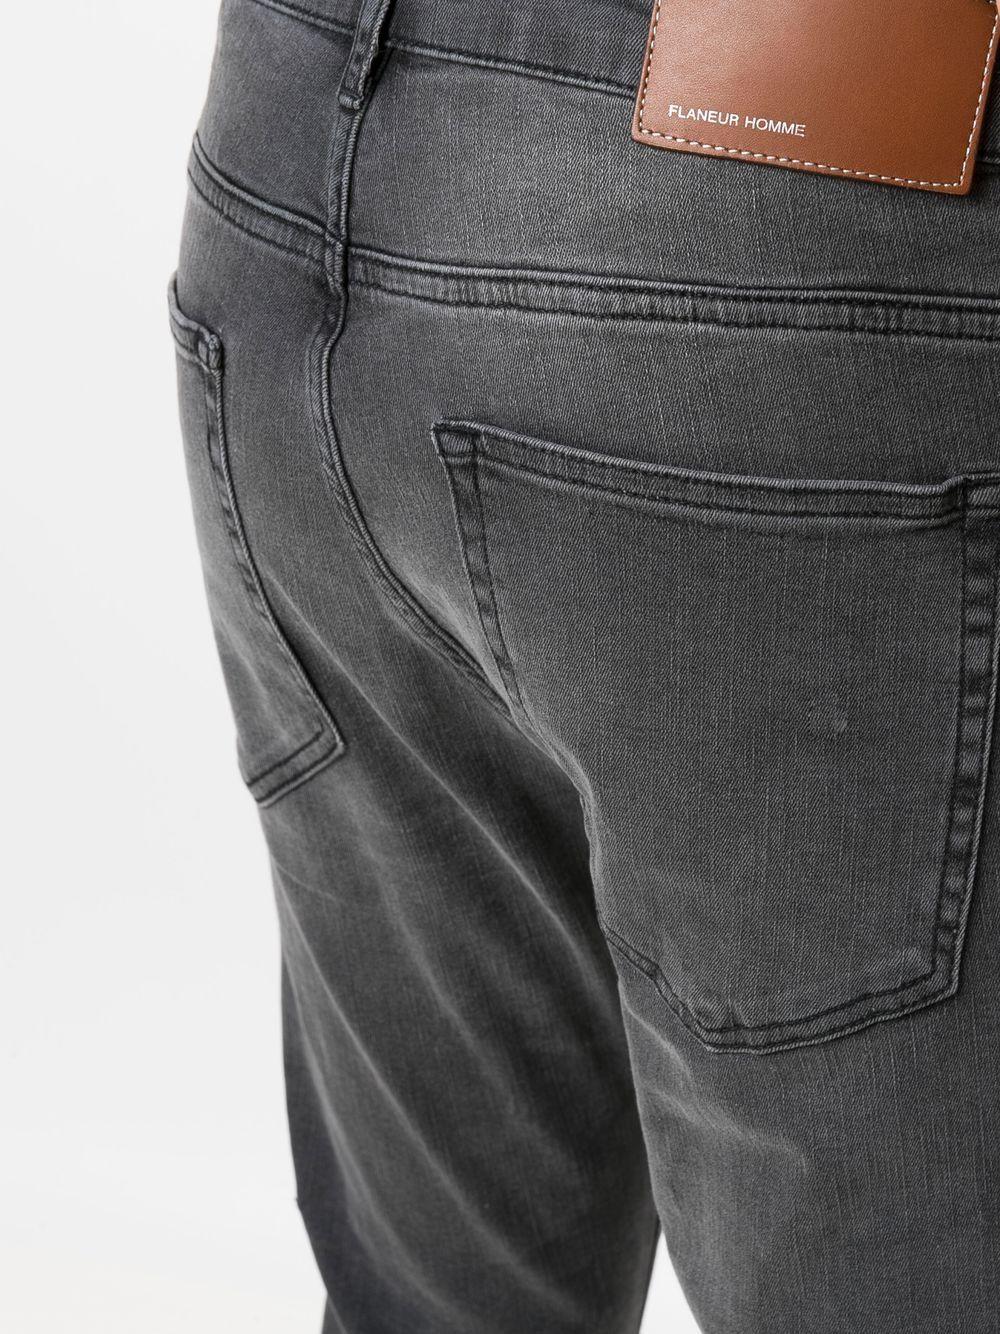 FLANEUR HOMME Distressed Denim Jeans in Grey for Men | Lyst UK